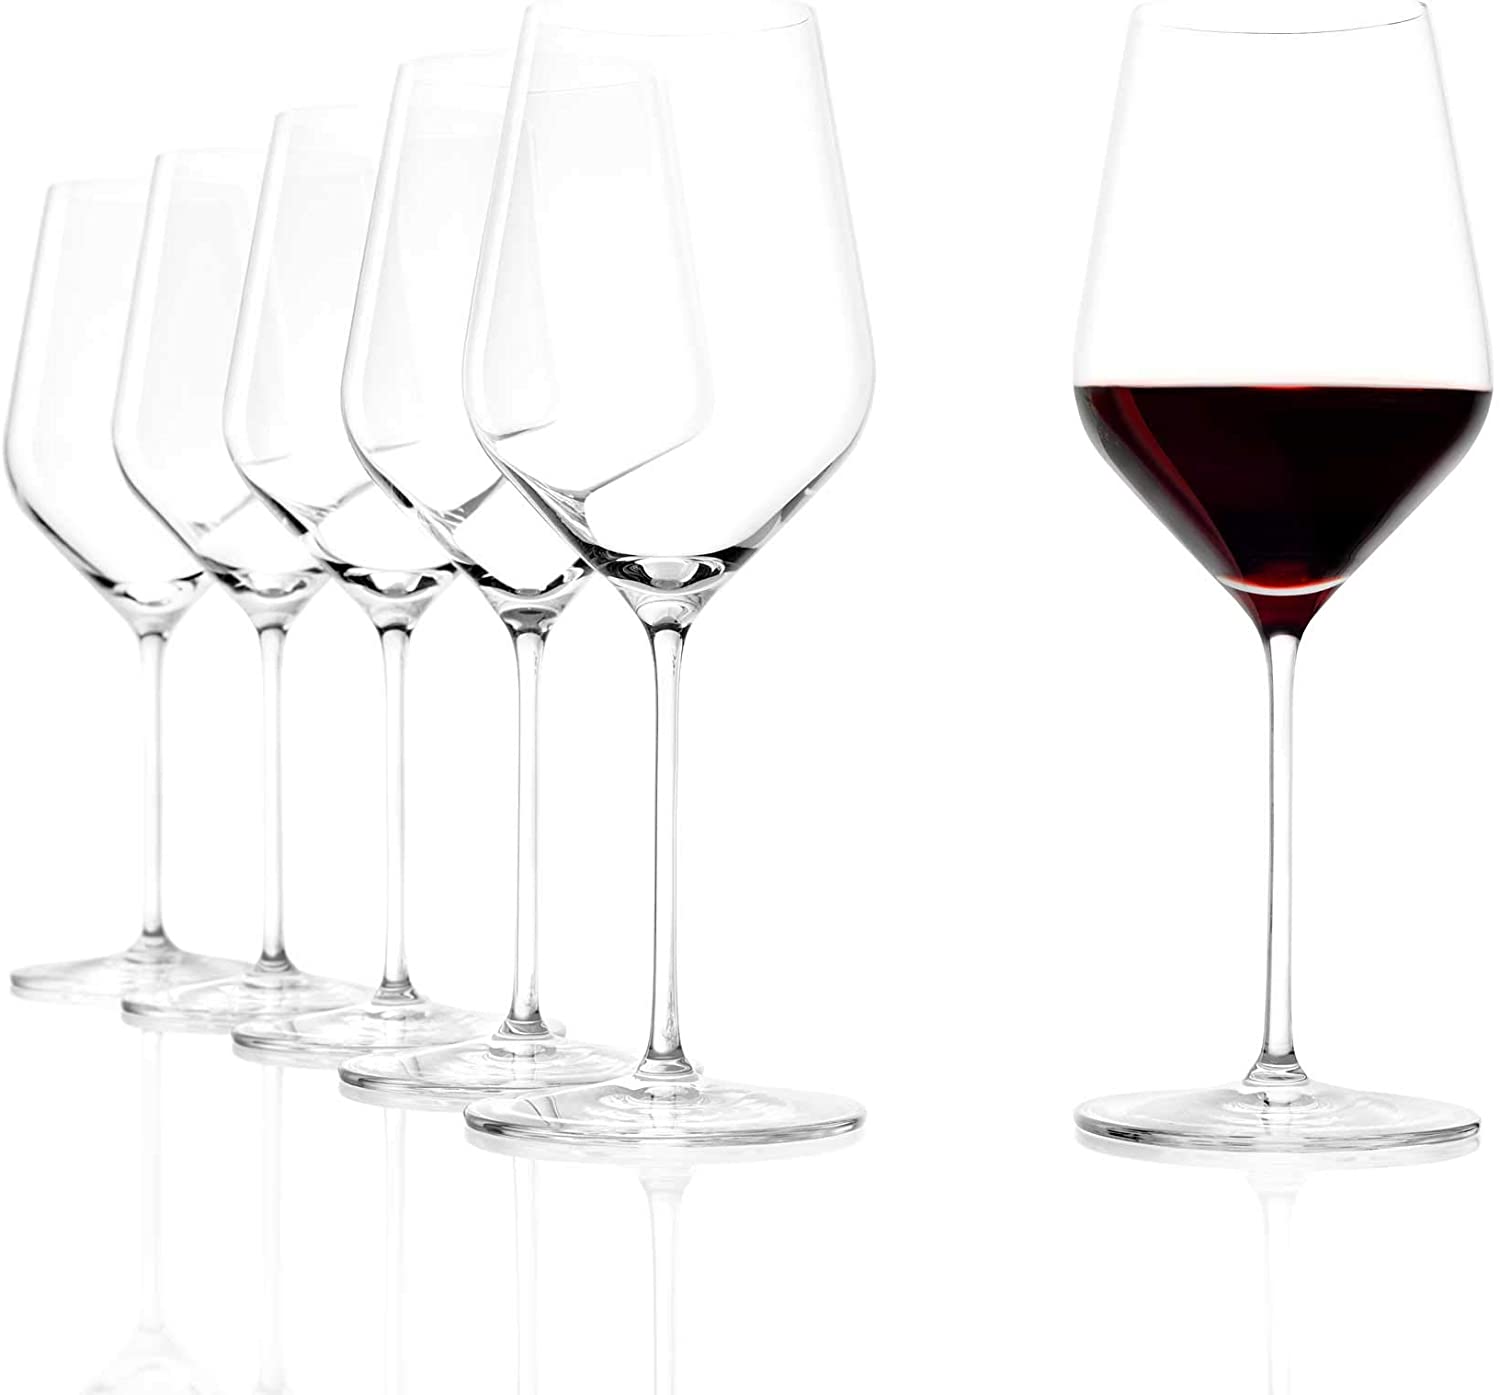 Stölzle Lausitz Starlight Glasses Wine Glasses Highly Functional Wine Goblets Dishwasher Safe Set of 6